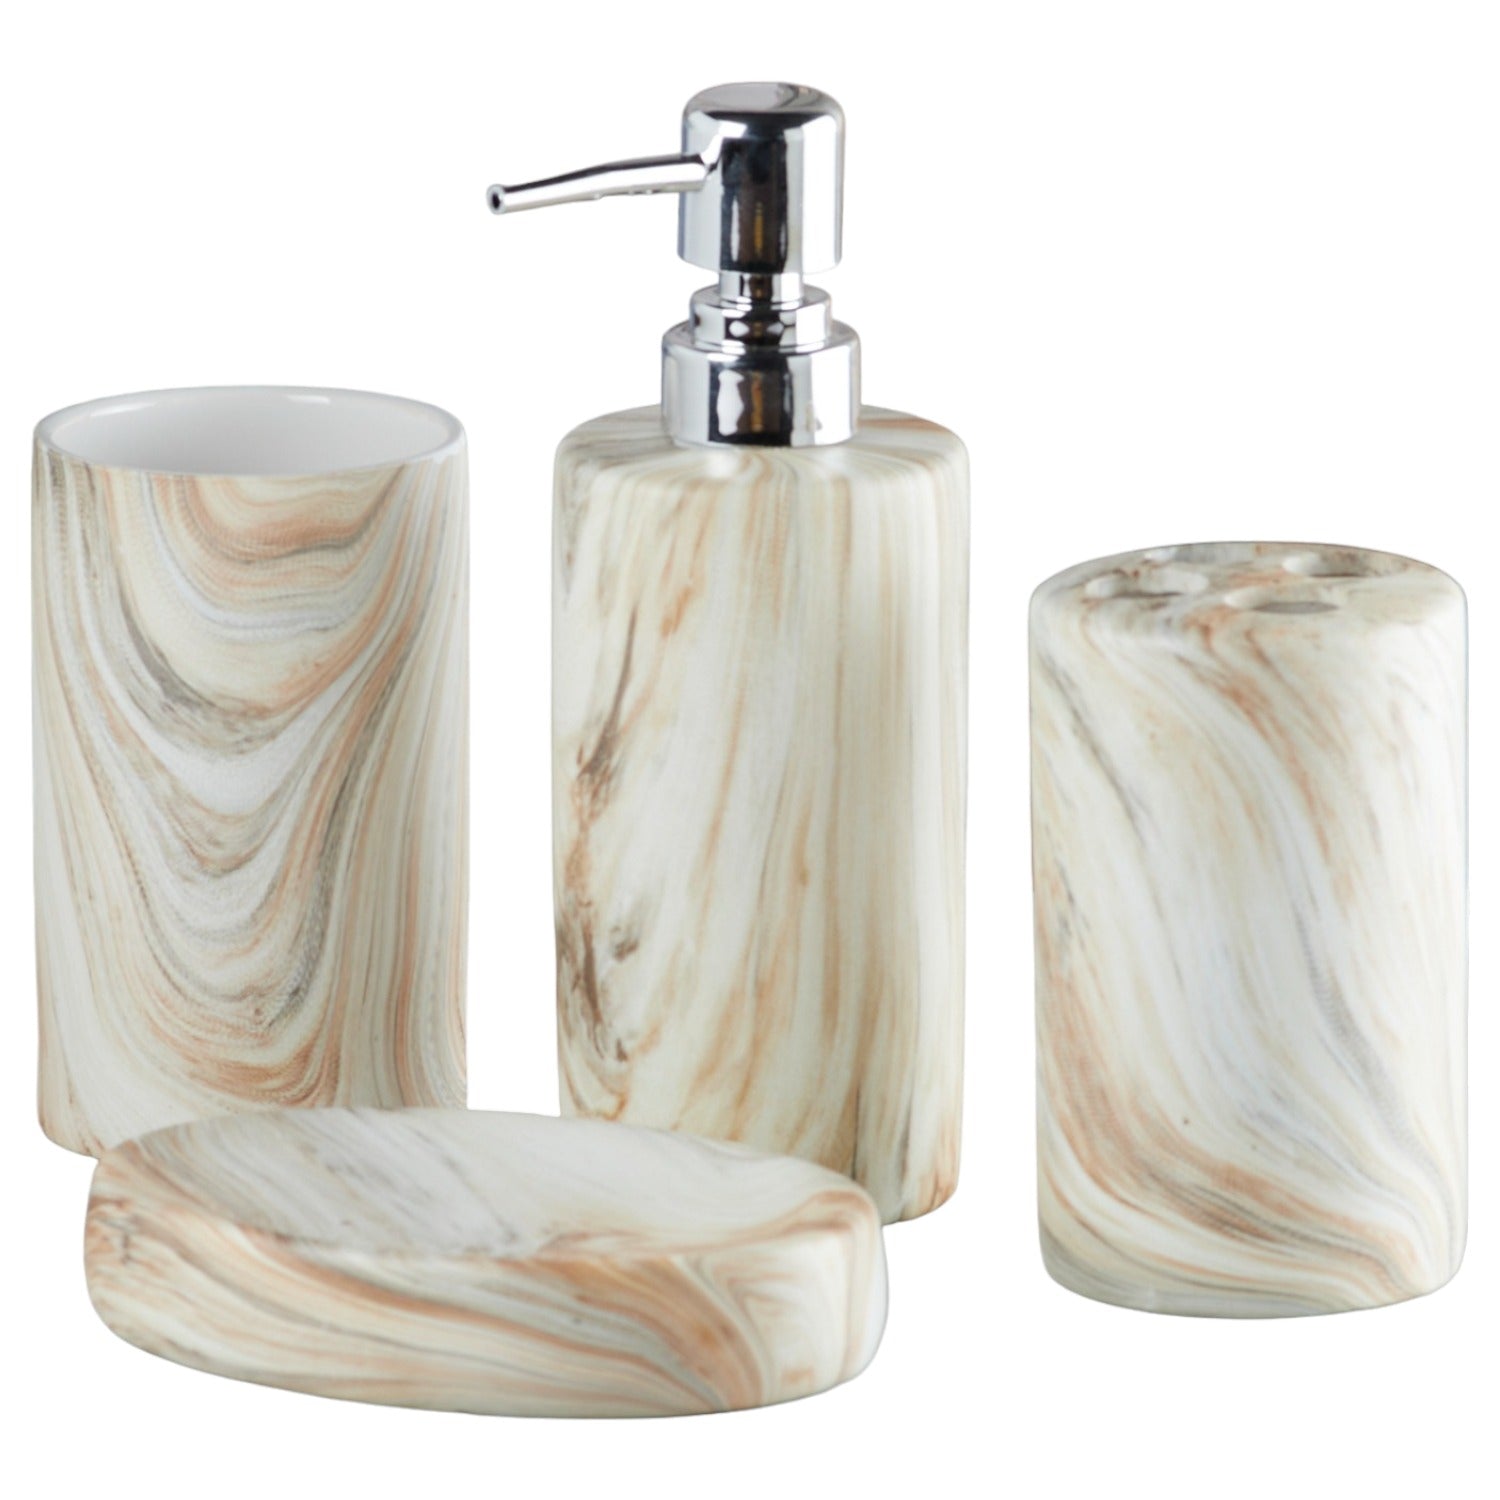 Ceramic Bathroom Accessories Set of 4 Bath Set with Soap Dispenser (8243)